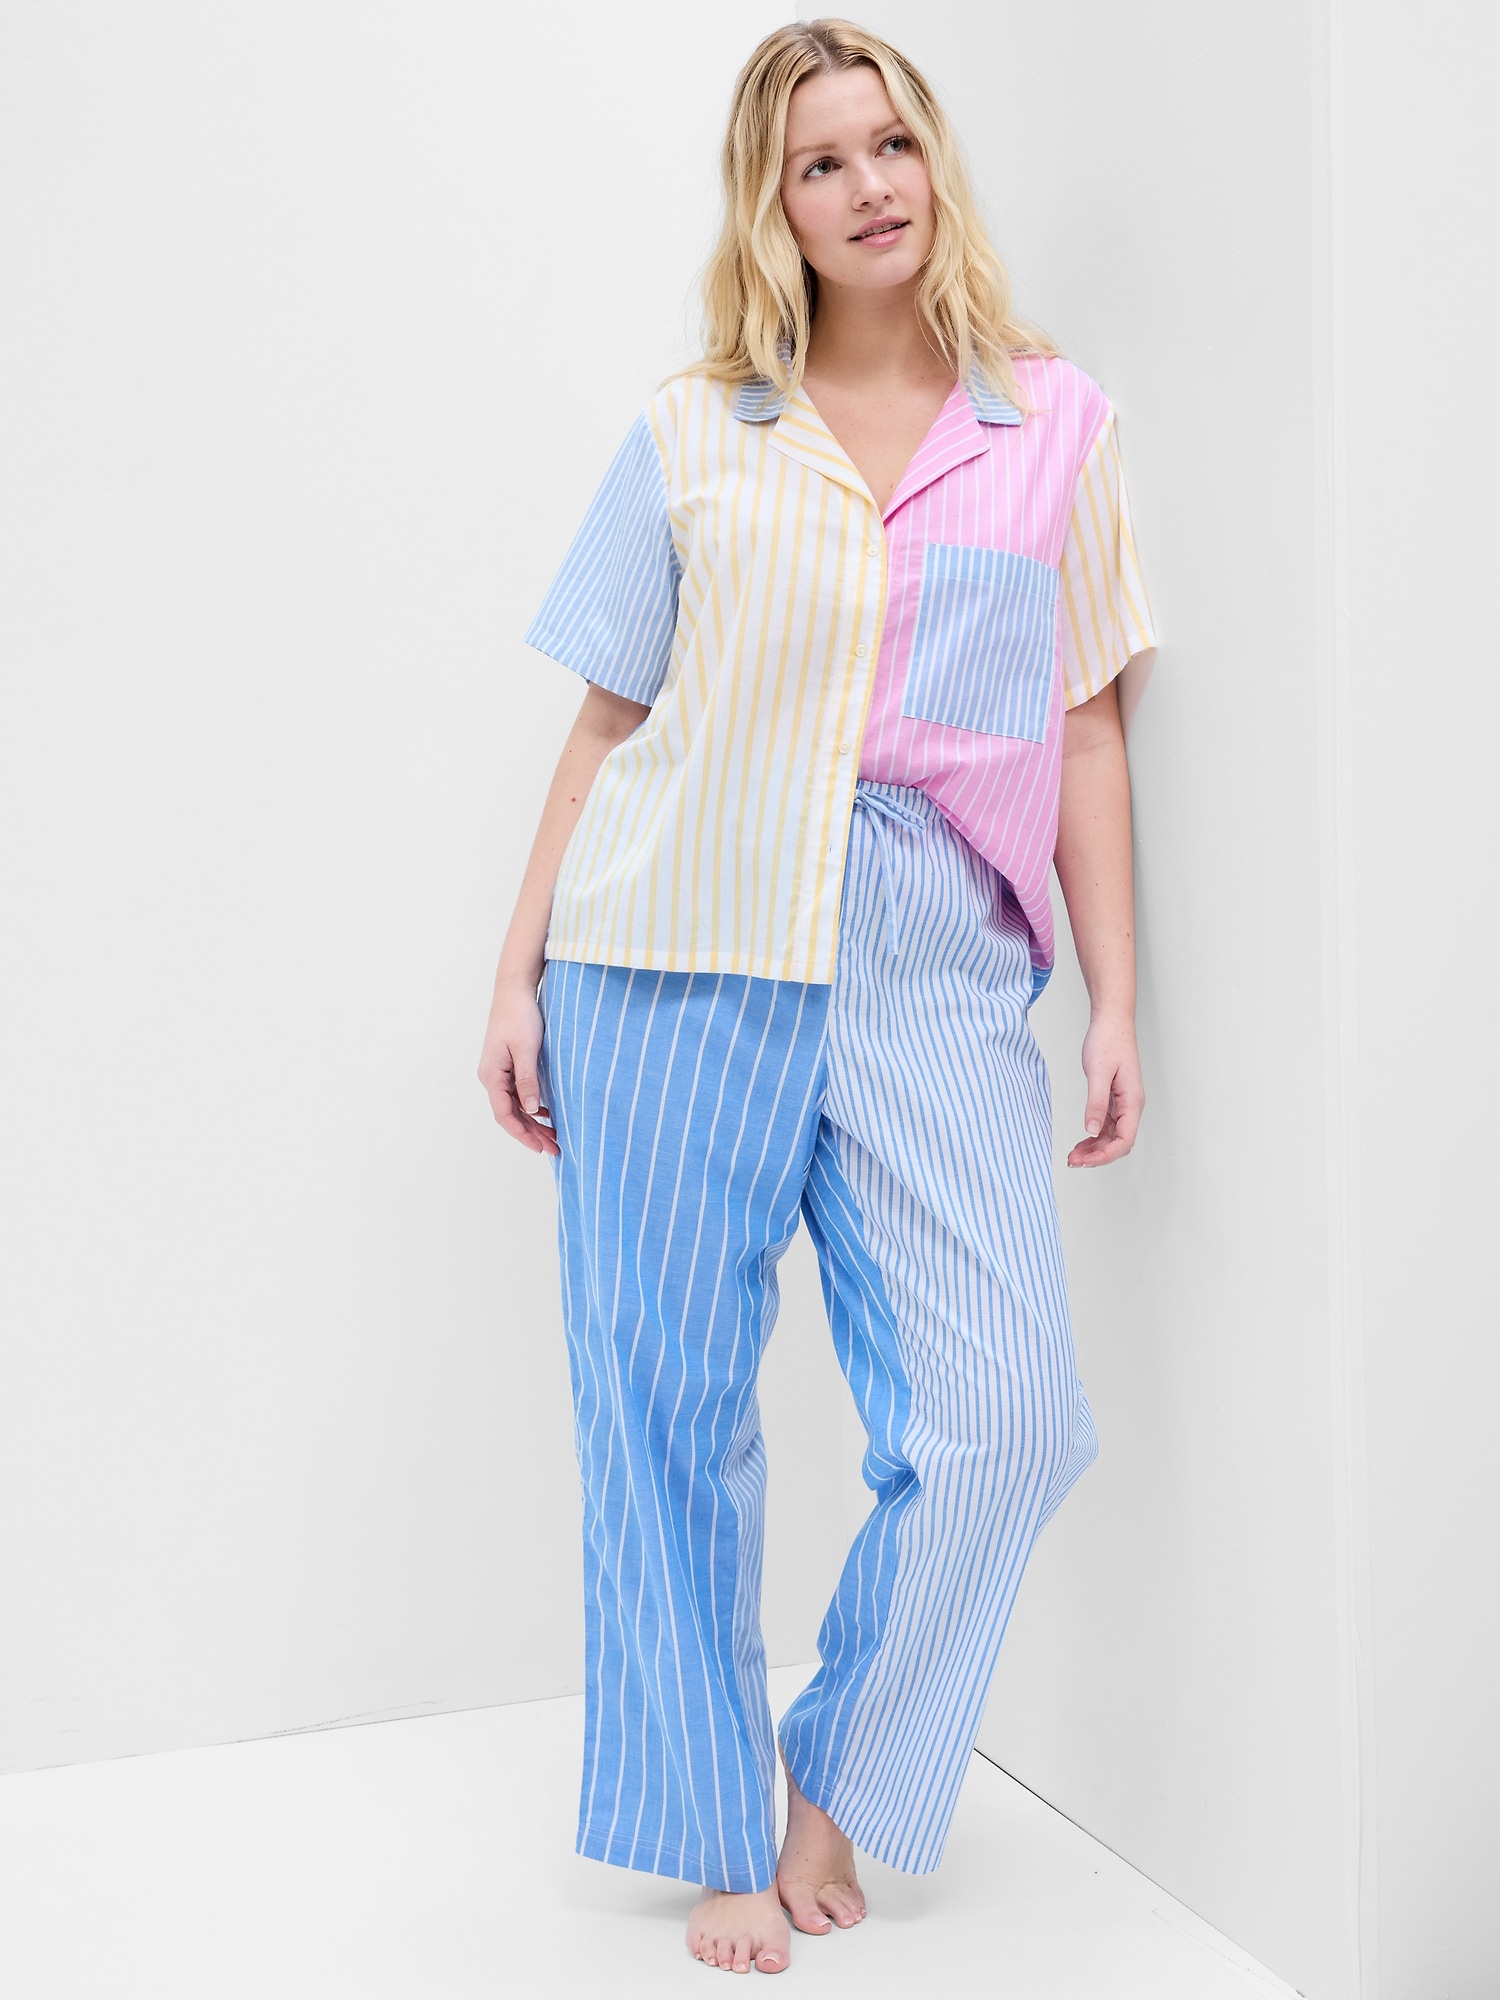 2-pack Cotton Poplin Pajama Shorts - Blue/striped - Ladies